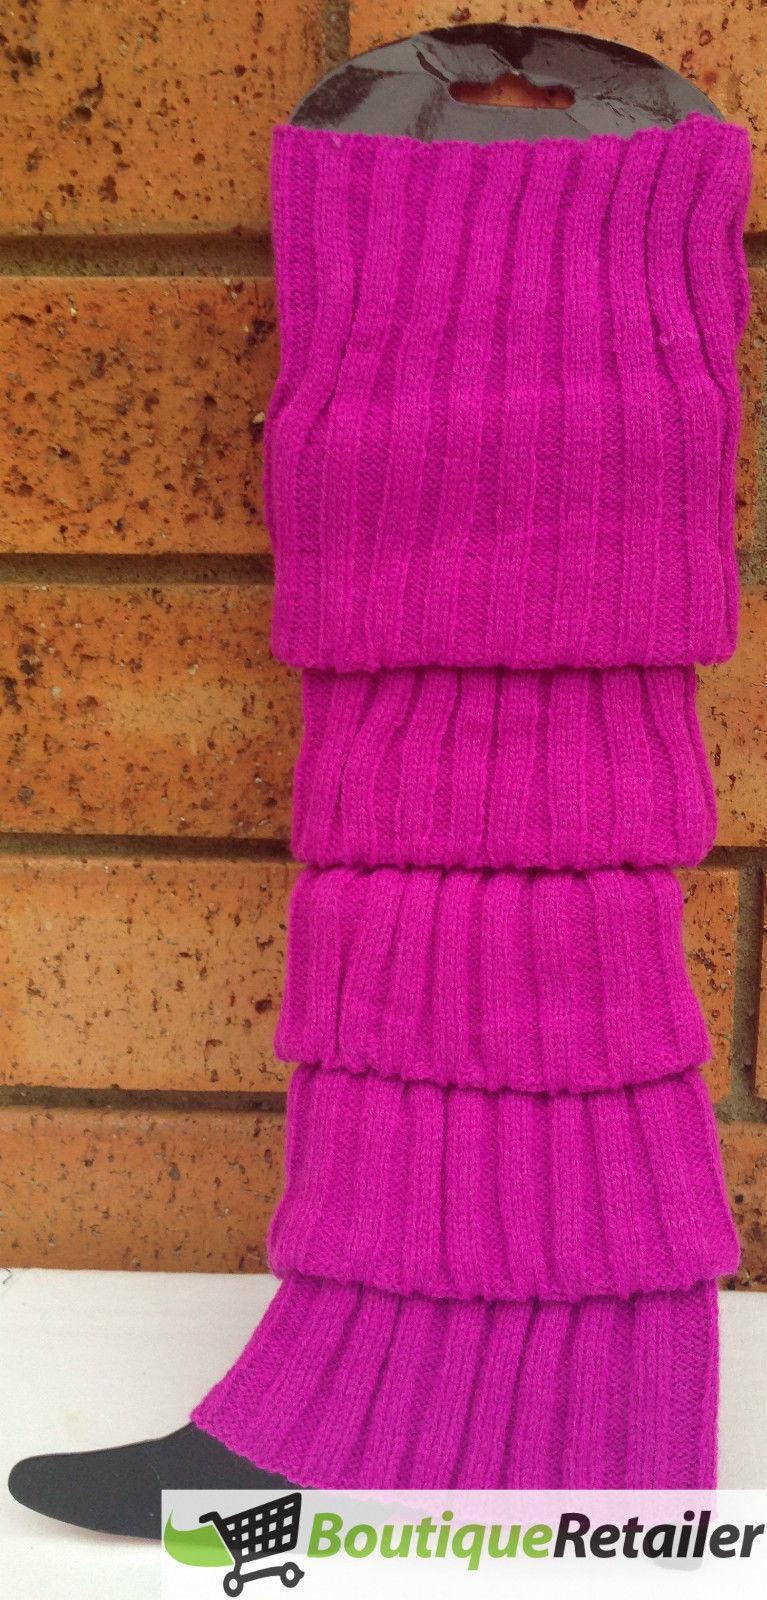 12x LEG WARMERS Knitted Womens Costume Neon Dance Party Knit 80s BULK - Purple